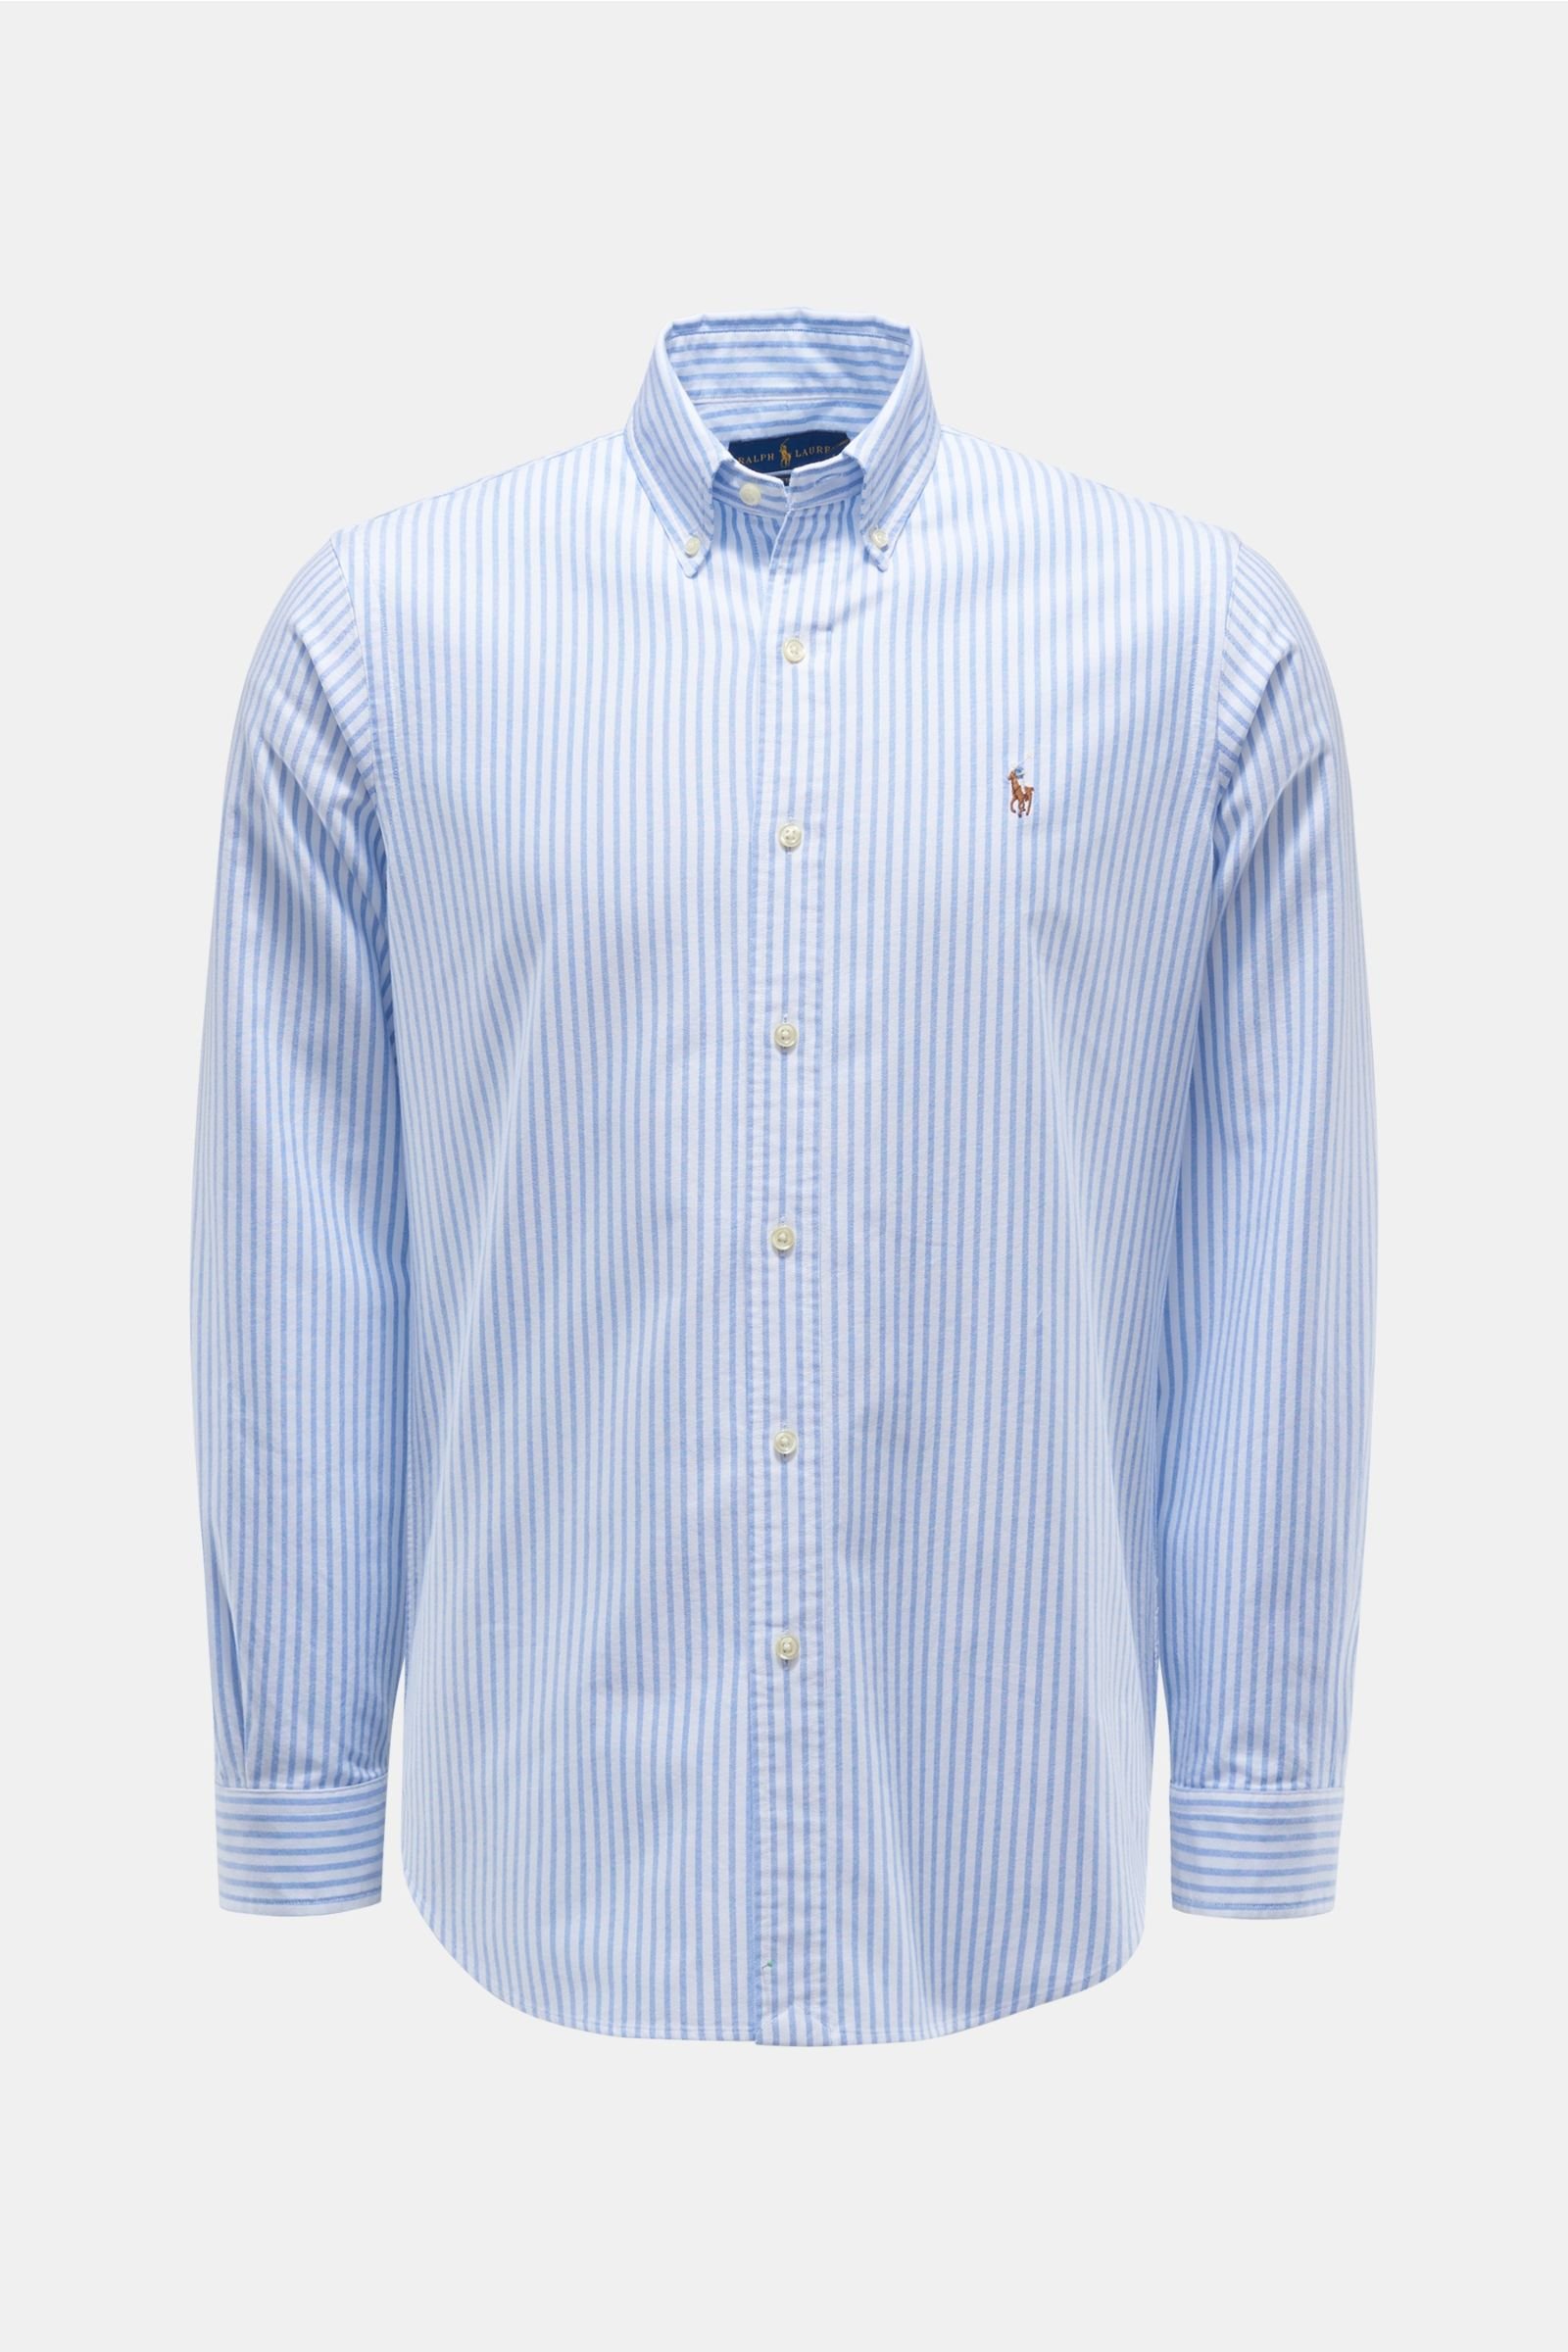 Oxford shirt button-down collar smoky blue/white striped